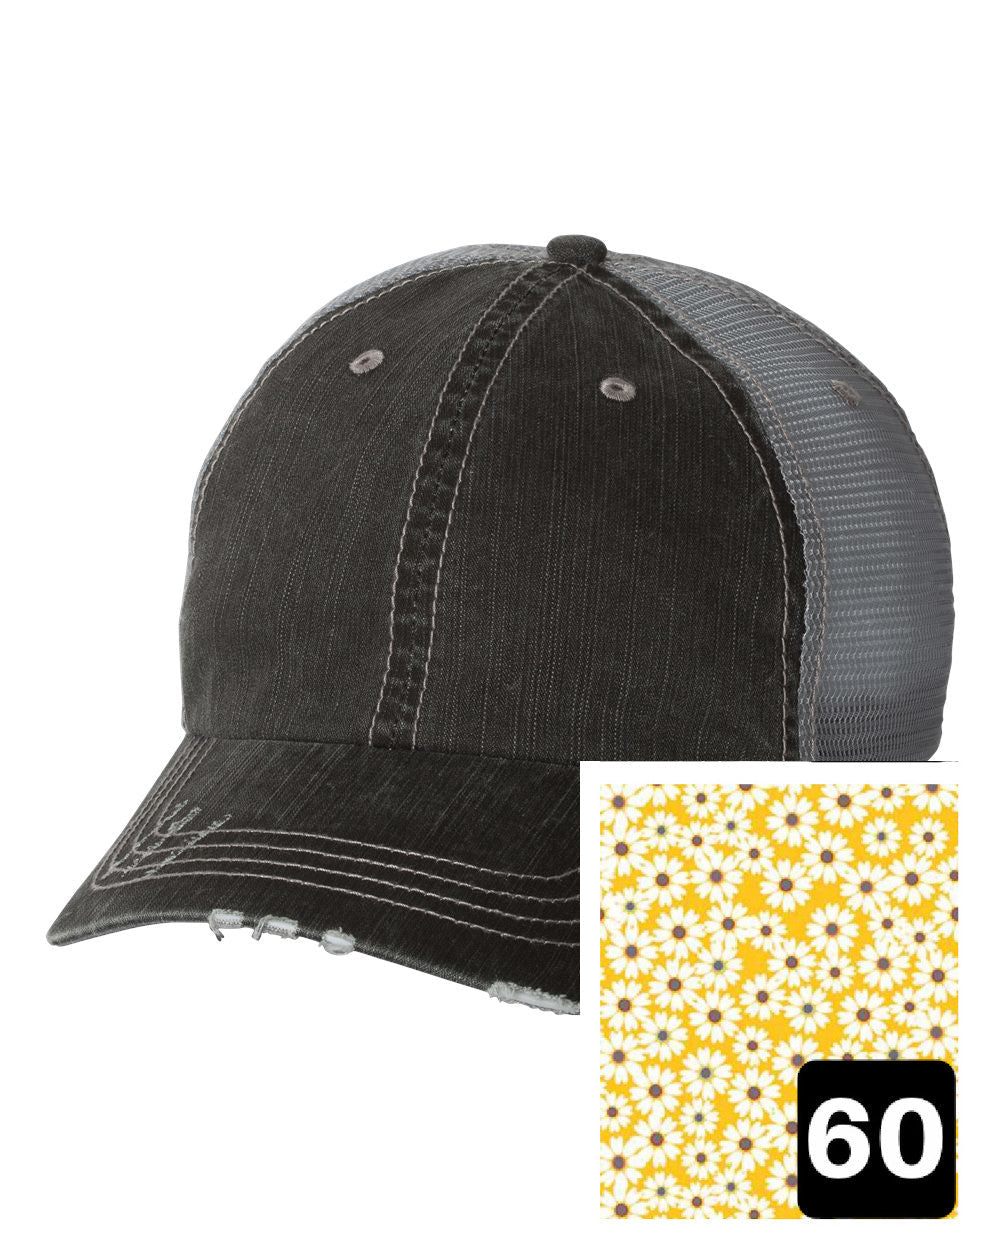 Nebraska Hat | Gray Distressed Trucker Cap | Many Fabric Choices